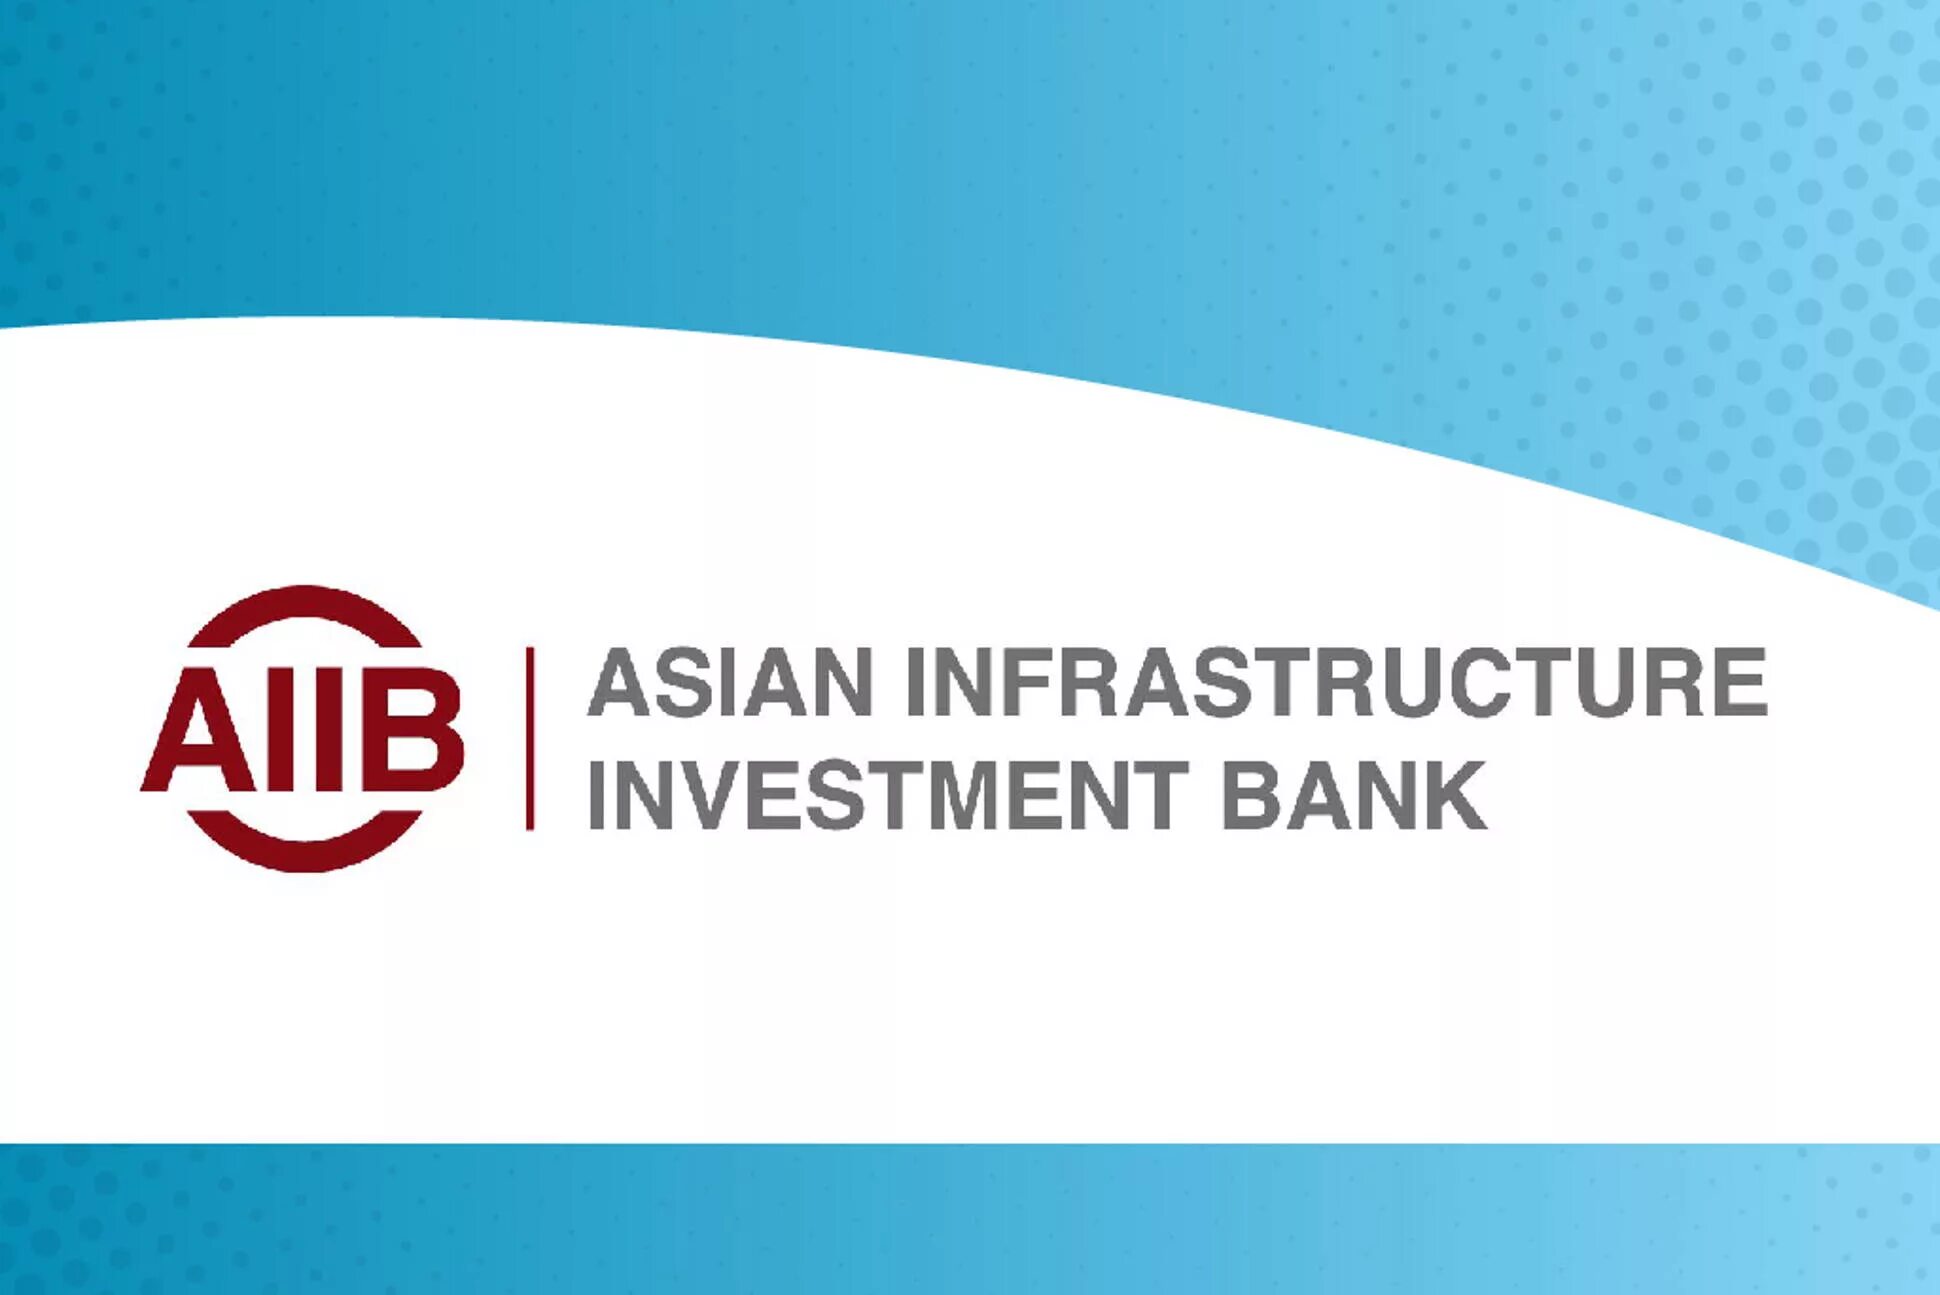 Металлургический инвестиционный банк. Азиатский банк инфраструктурных инвестиций. Азиатский банк инфраструктурных инвестиций (АБИИ). Asian infrastructure Bank логотип. Asian infrastructure investment Bank logo.